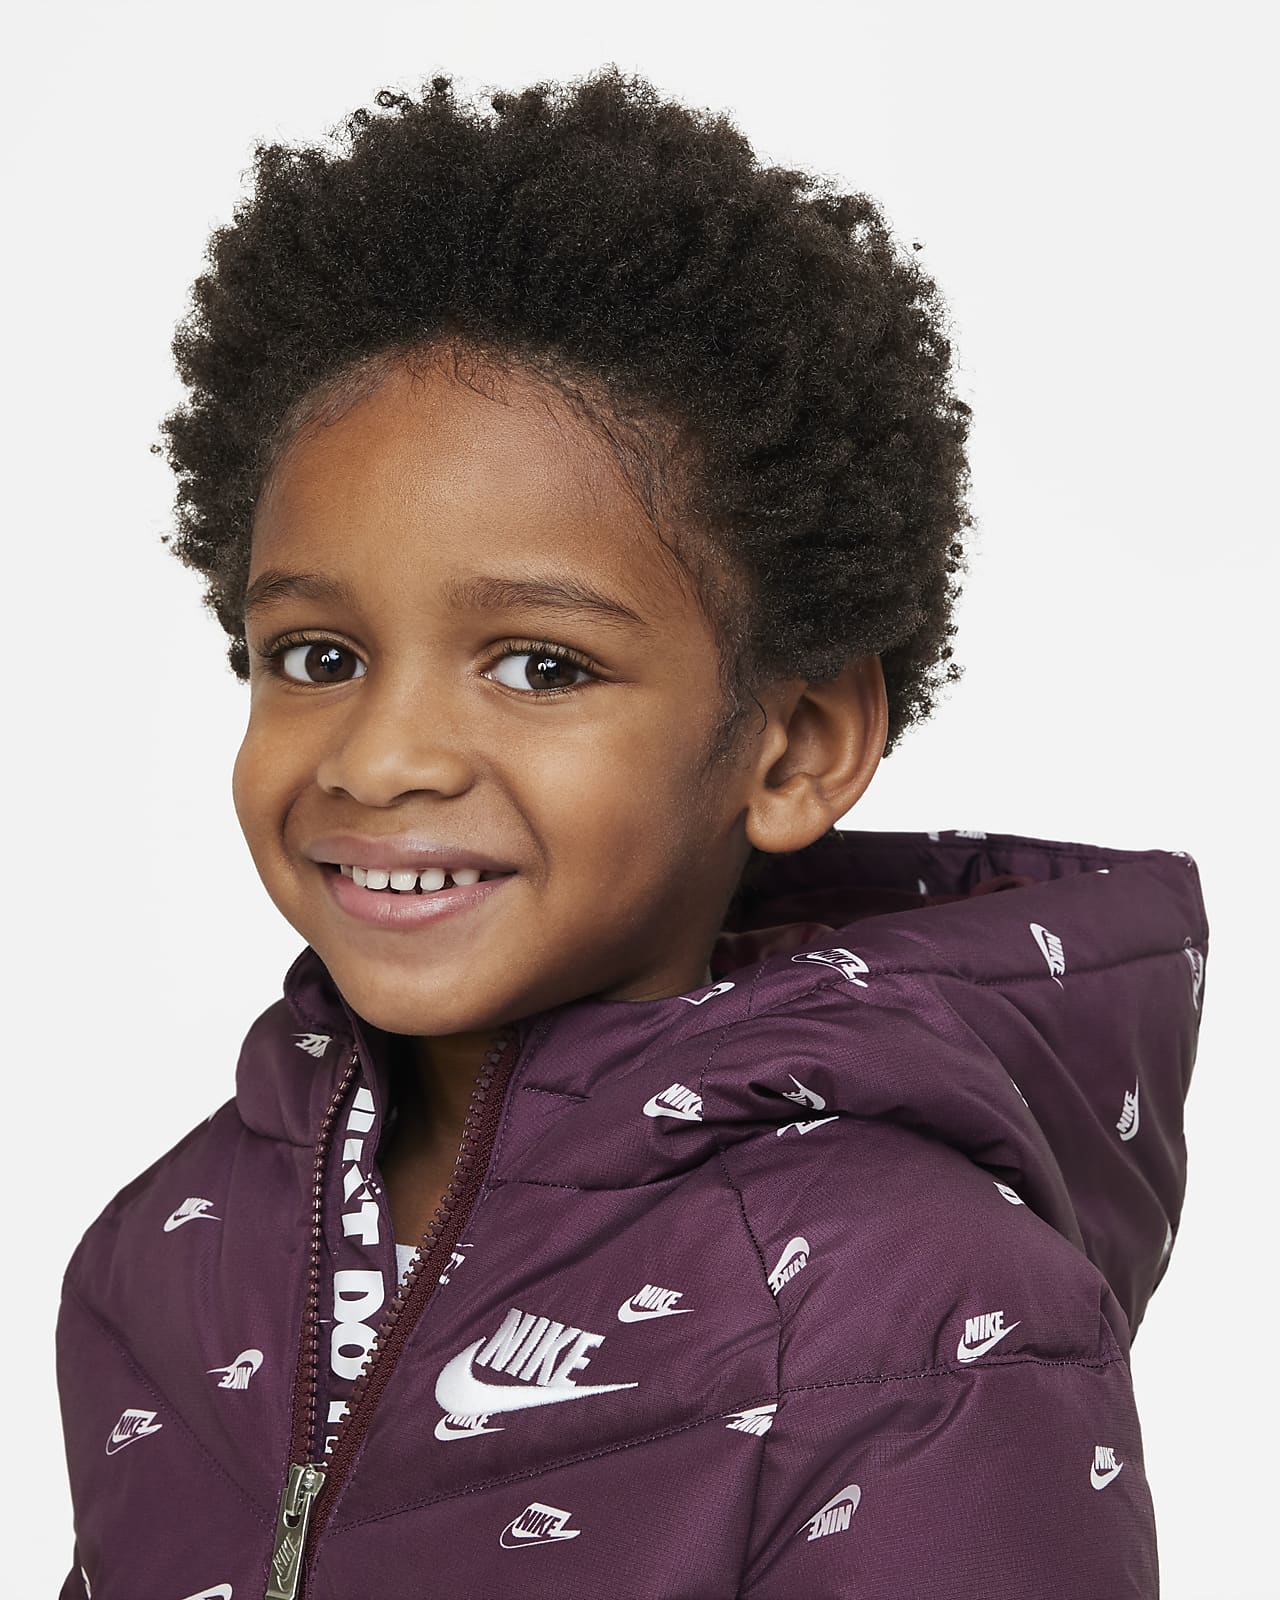 Nike Little Kids' Printed Hooded Jacket. Nike.com